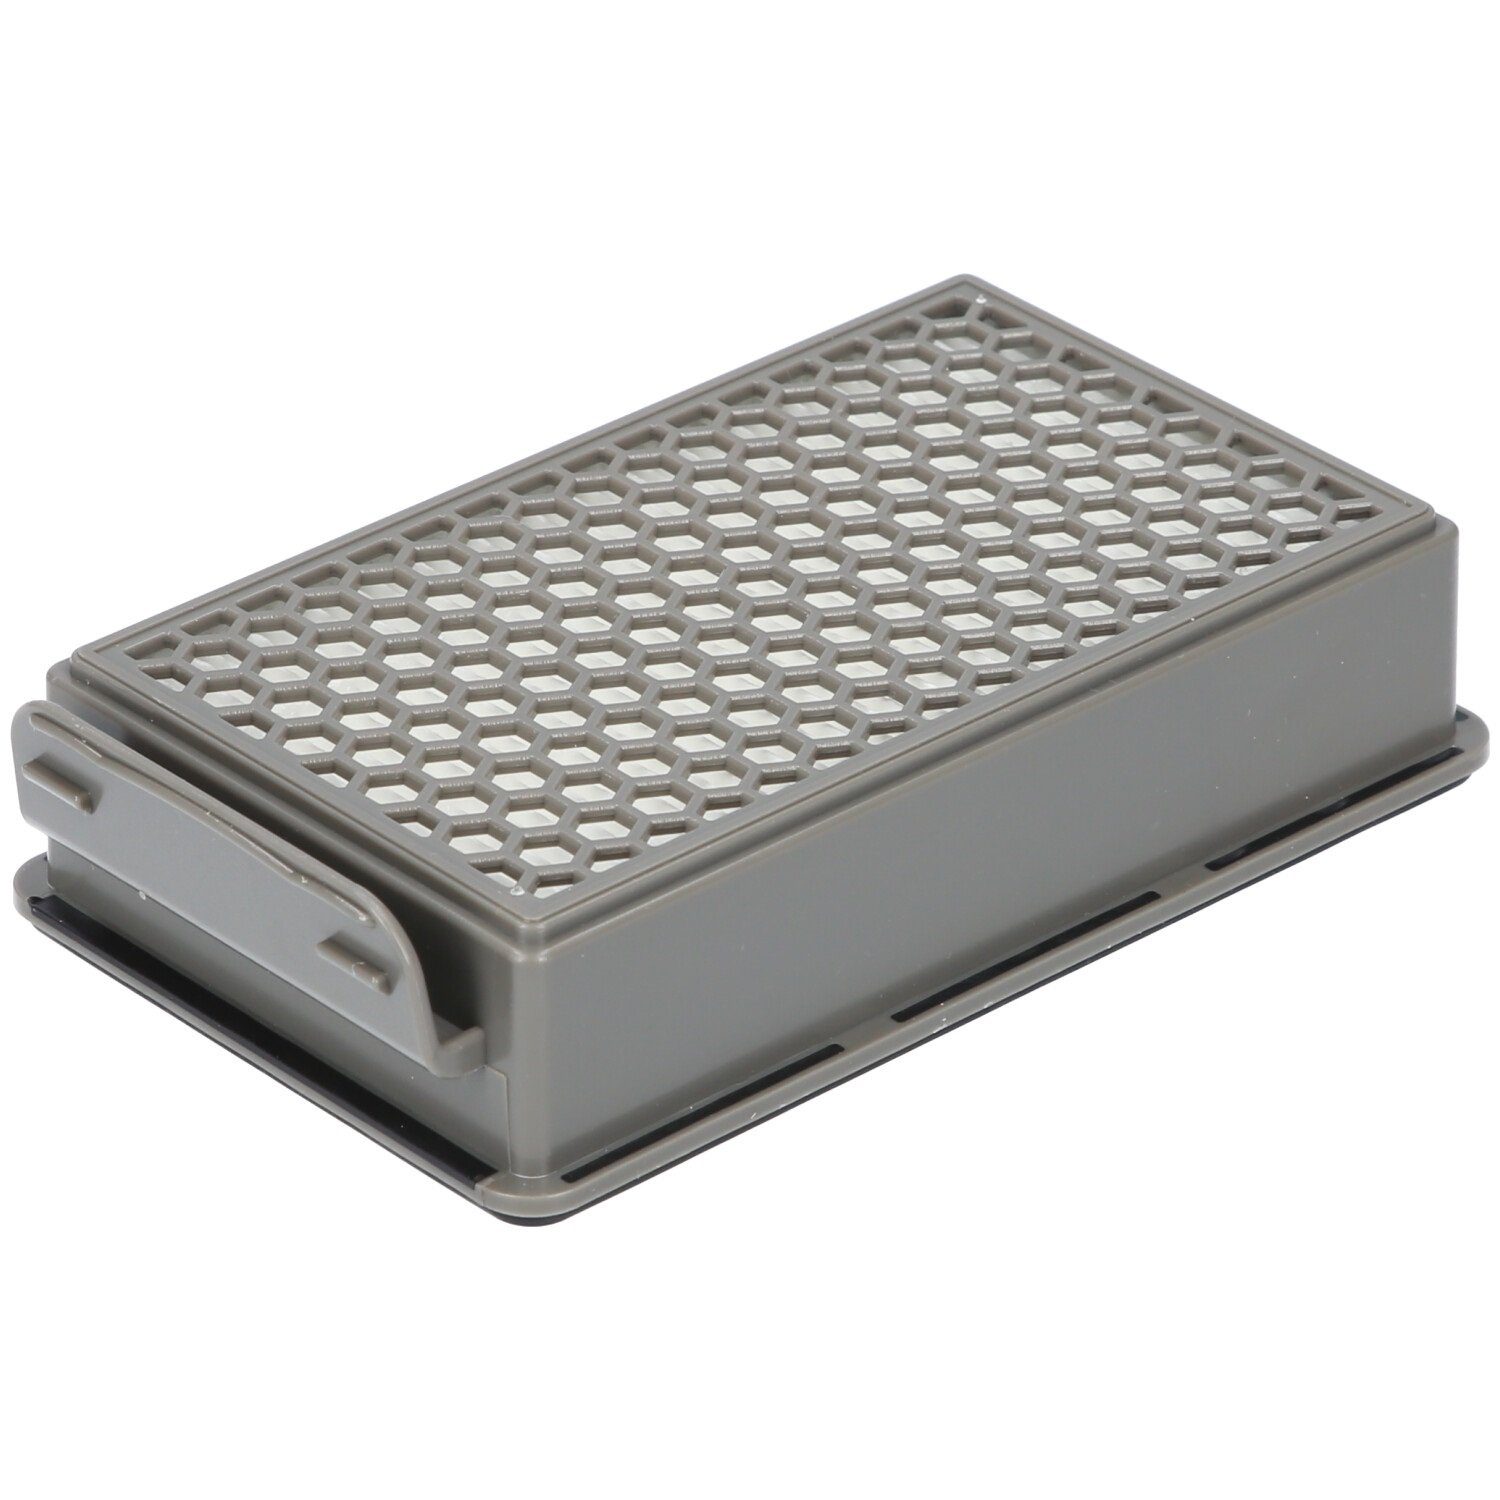 /TW3953EA TW3969EA geeignet Filterkassette, TW3931EA TW3985EA für ZR005901 McFilter Rundfilter, 1x / TW3999EA, für / Alternative Tefal / Filter-Set 1x